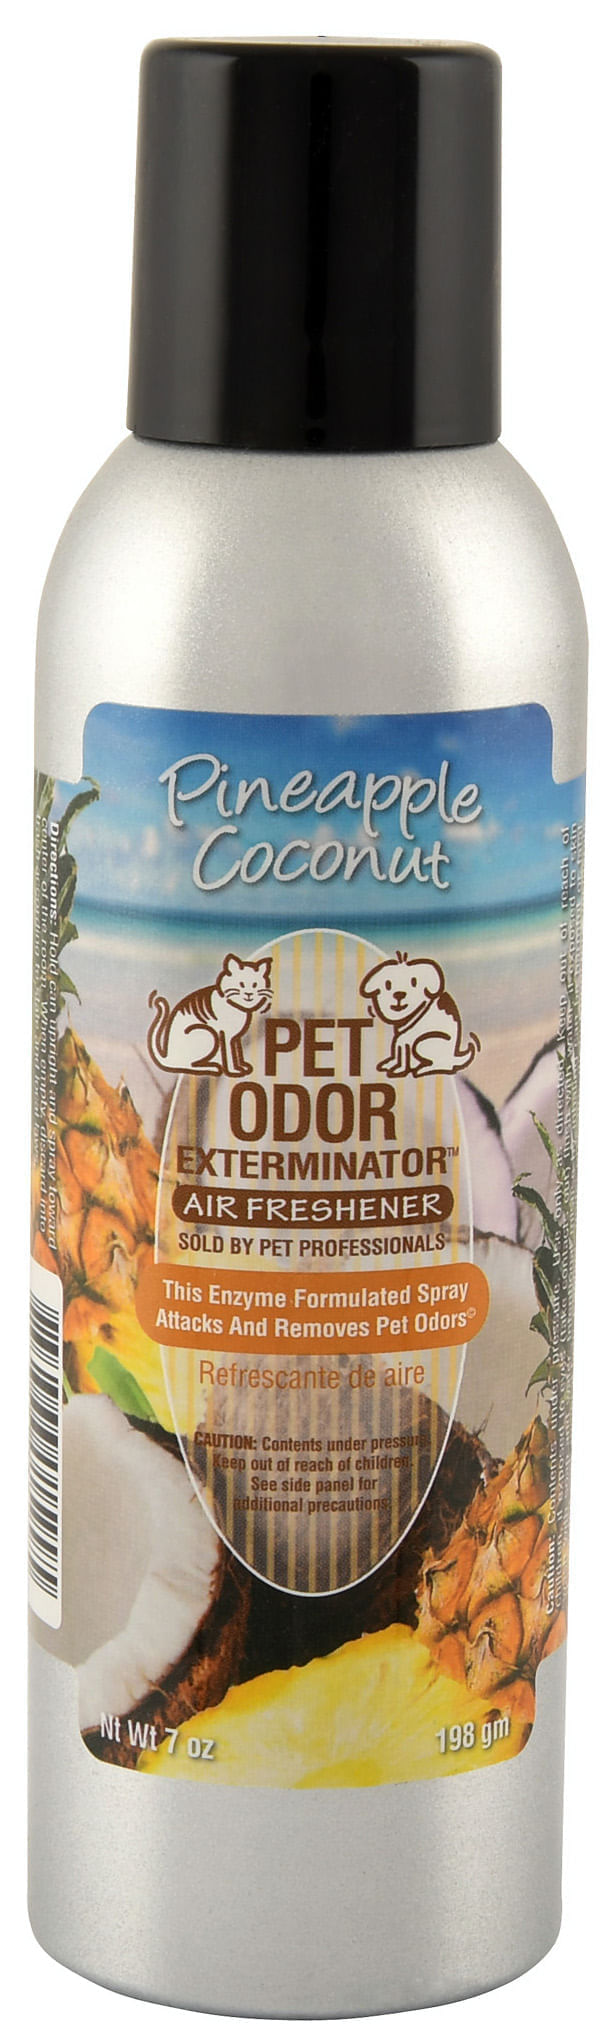 Pet-Odor-Exterminator-Spray-Pineapple-Coconut